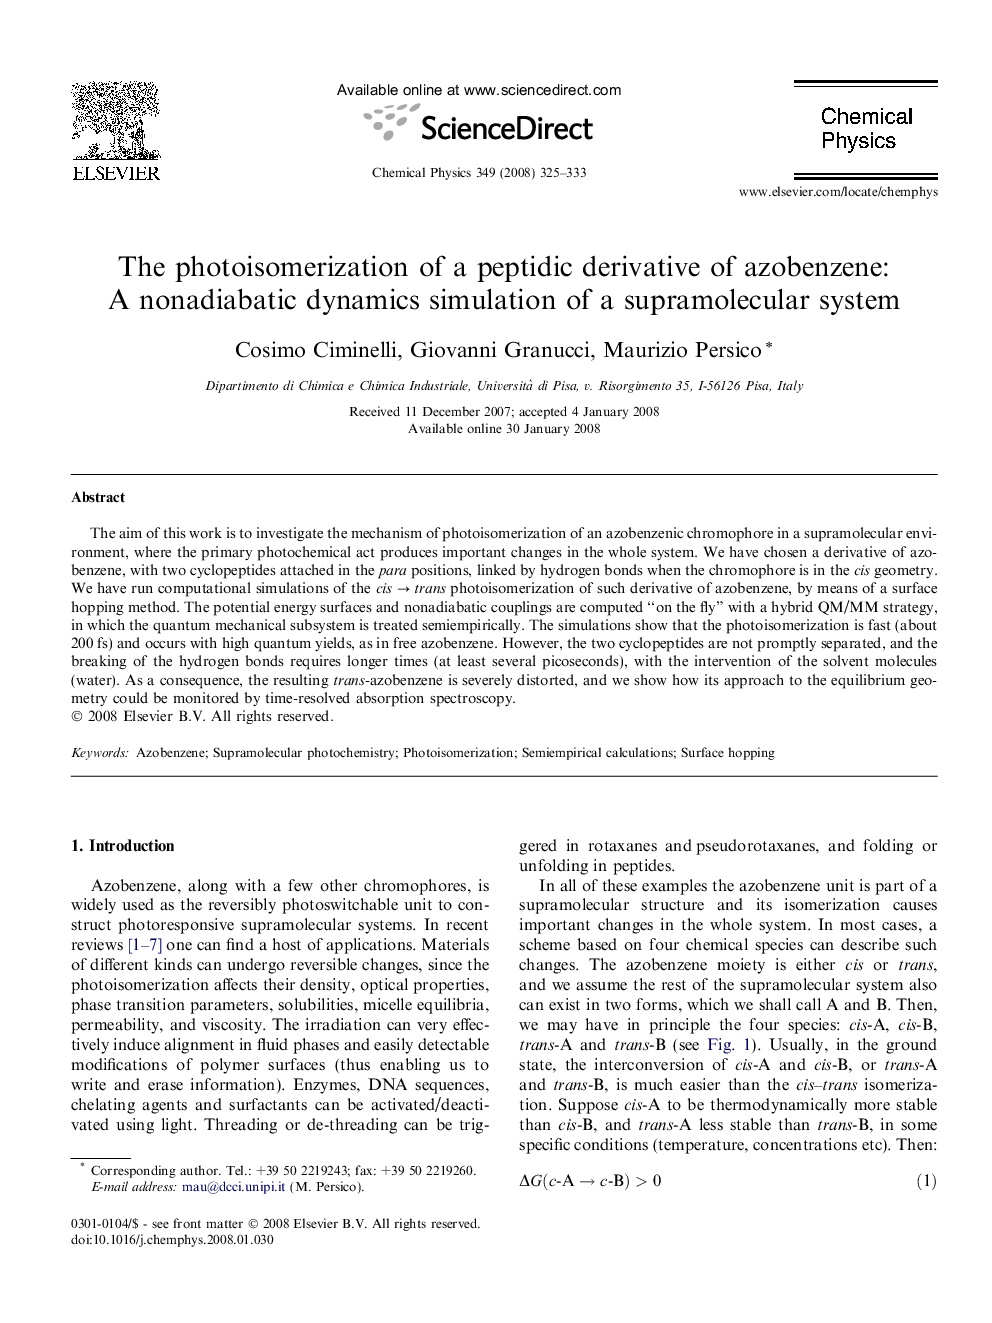 The photoisomerization of a peptidic derivative of azobenzene: A nonadiabatic dynamics simulation of a supramolecular system